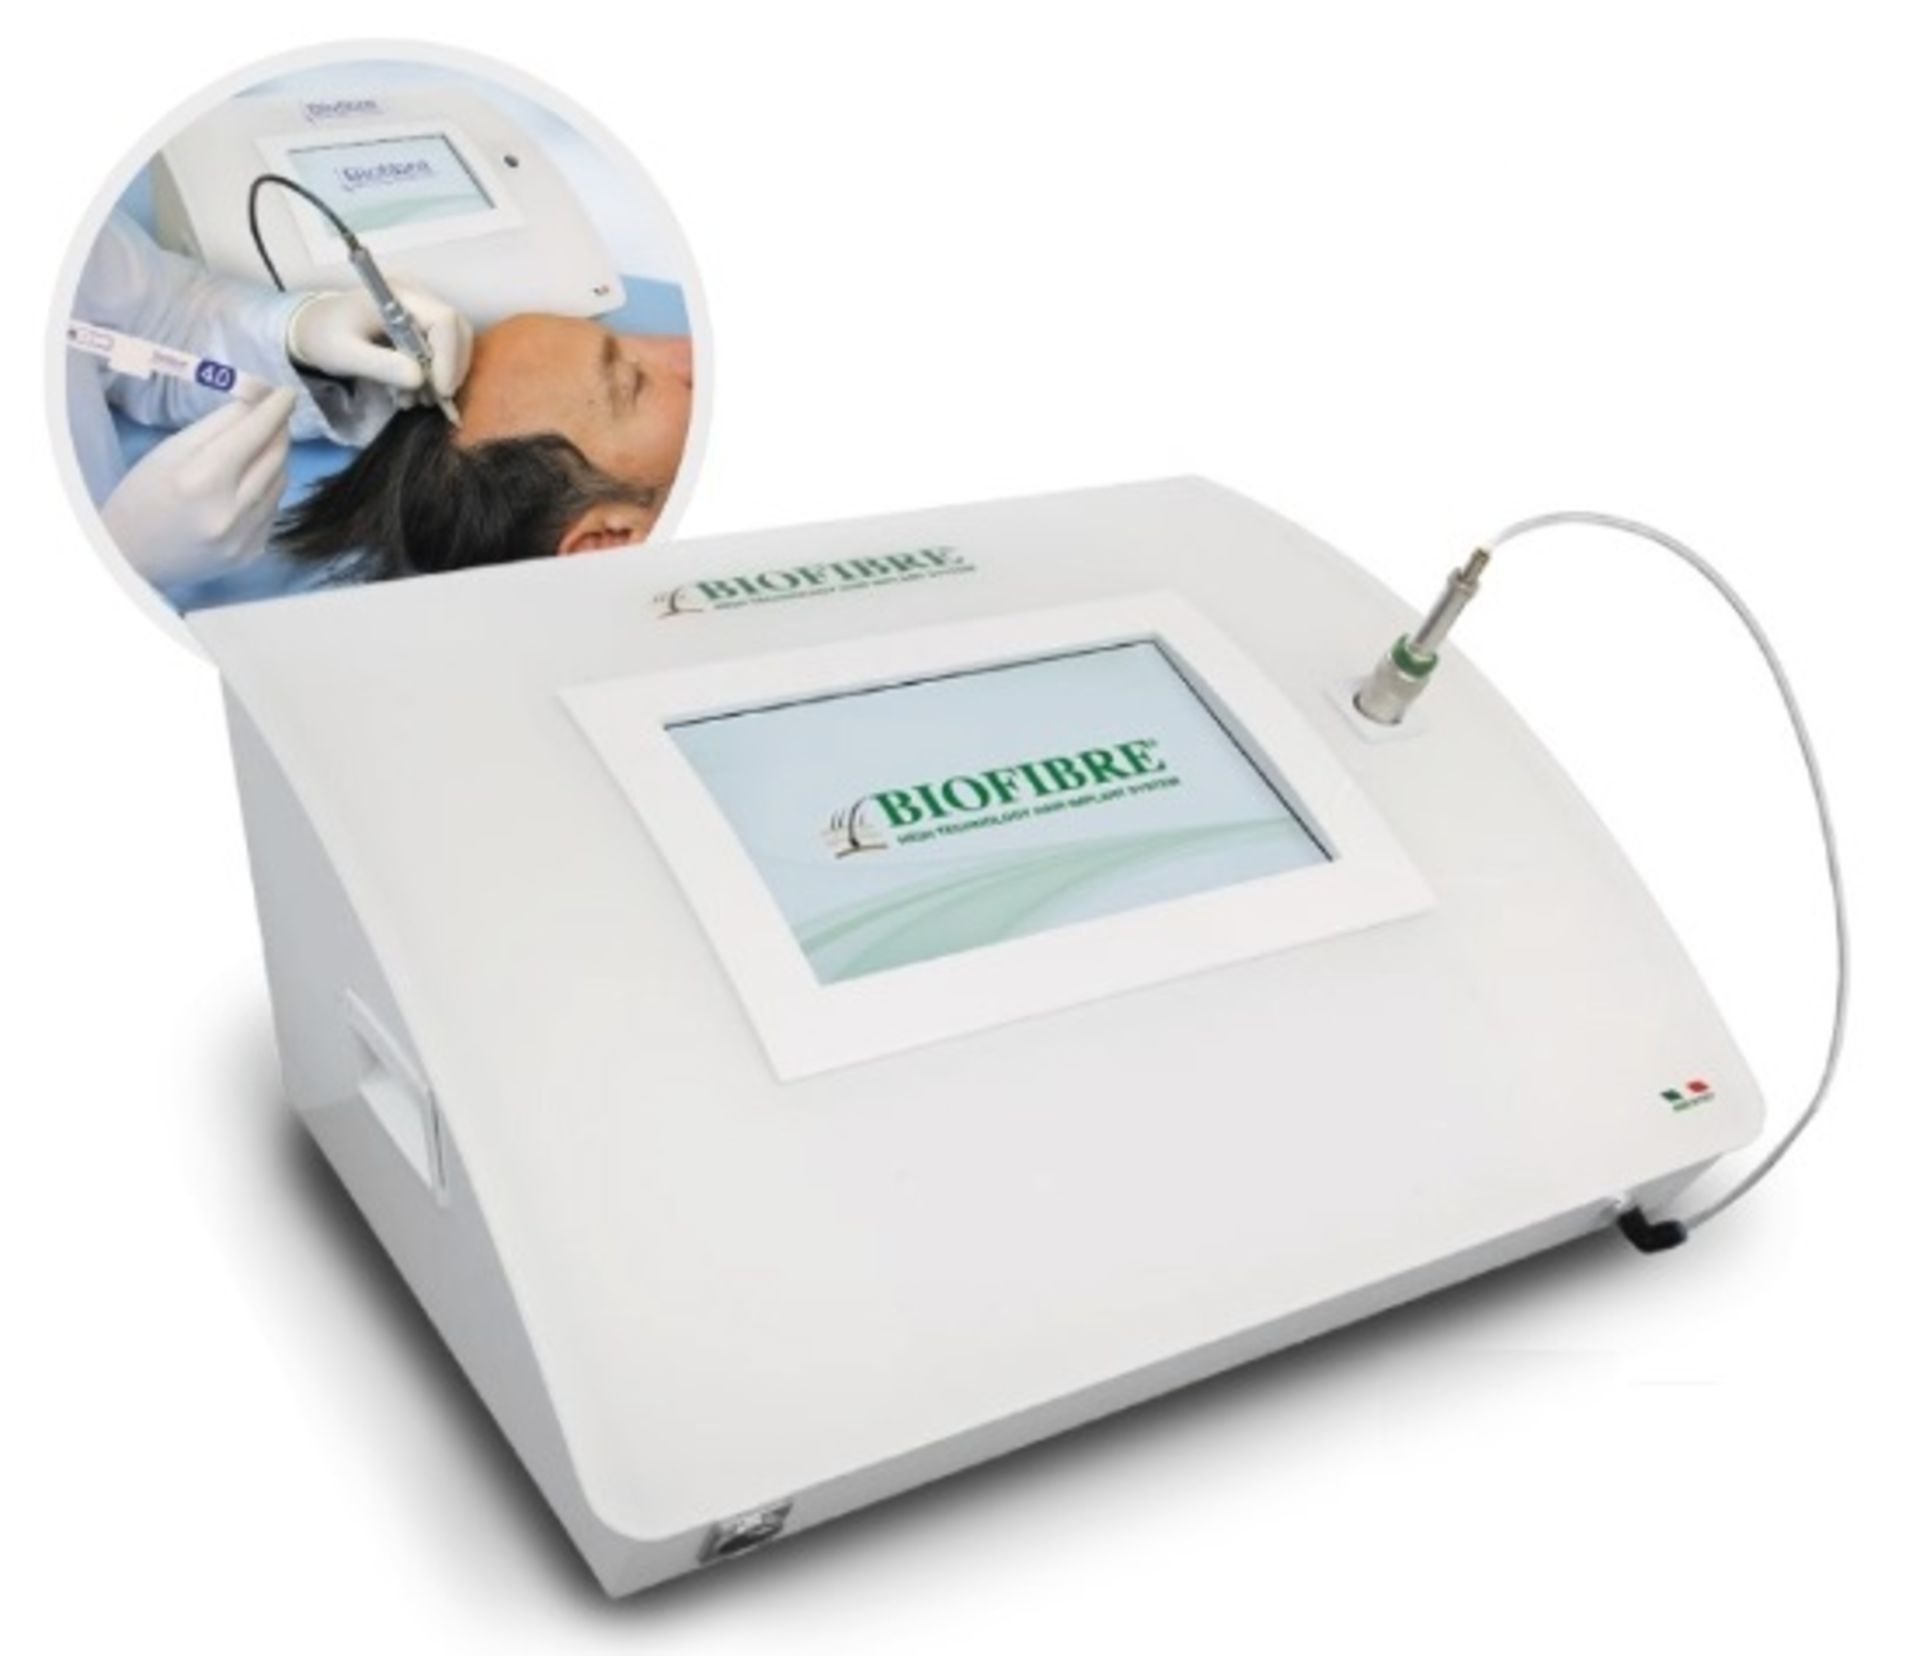 1 x Medicap BioFibre High Technology Hair Transplant System